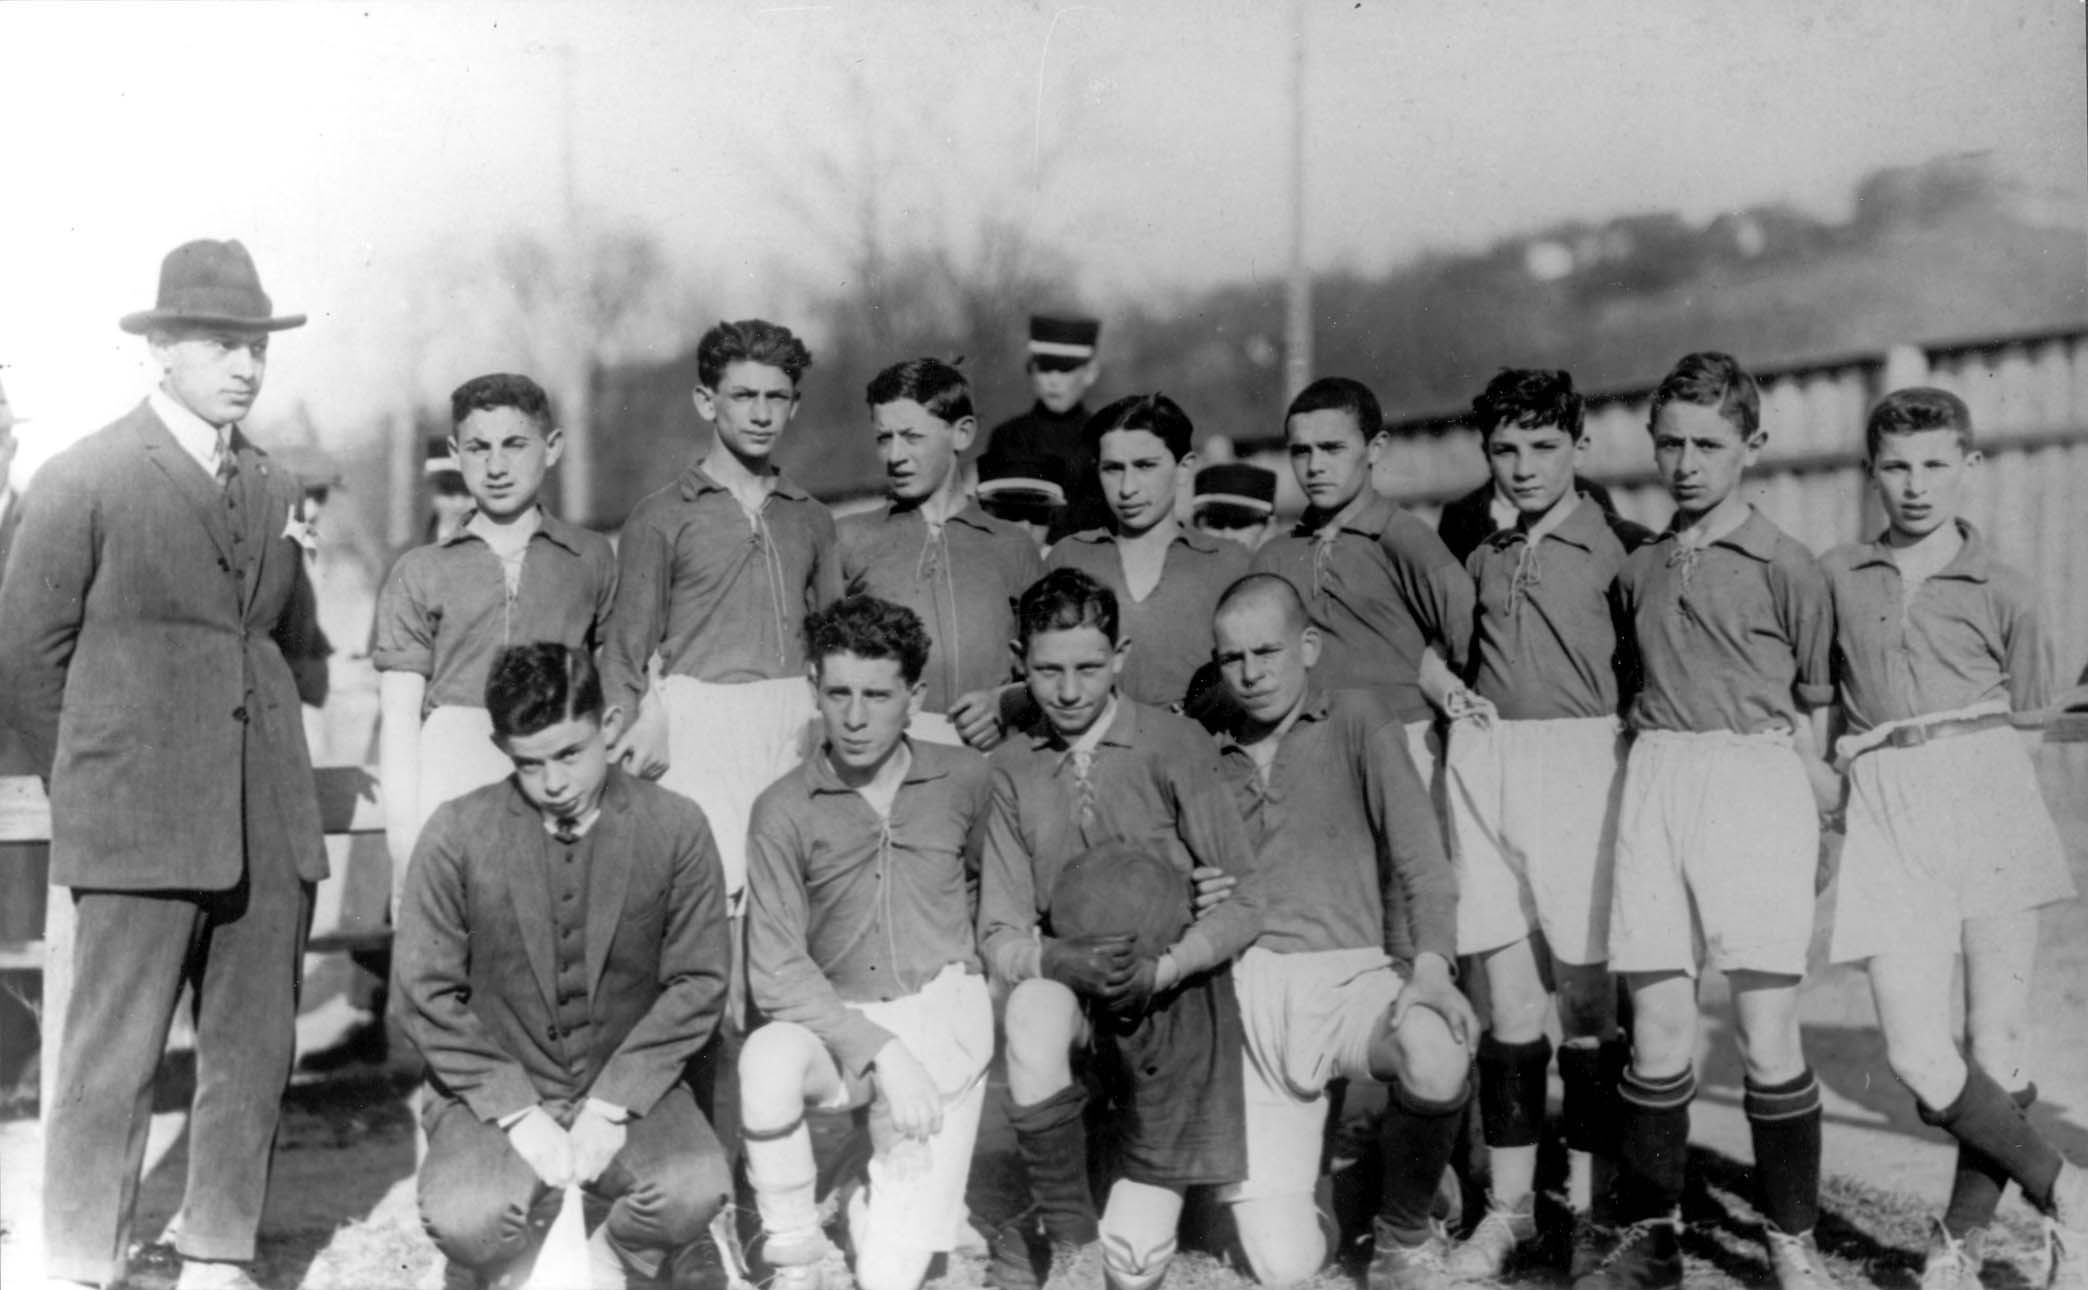 Kovno, Lithuania, Prewar, a Jewish youth football team.